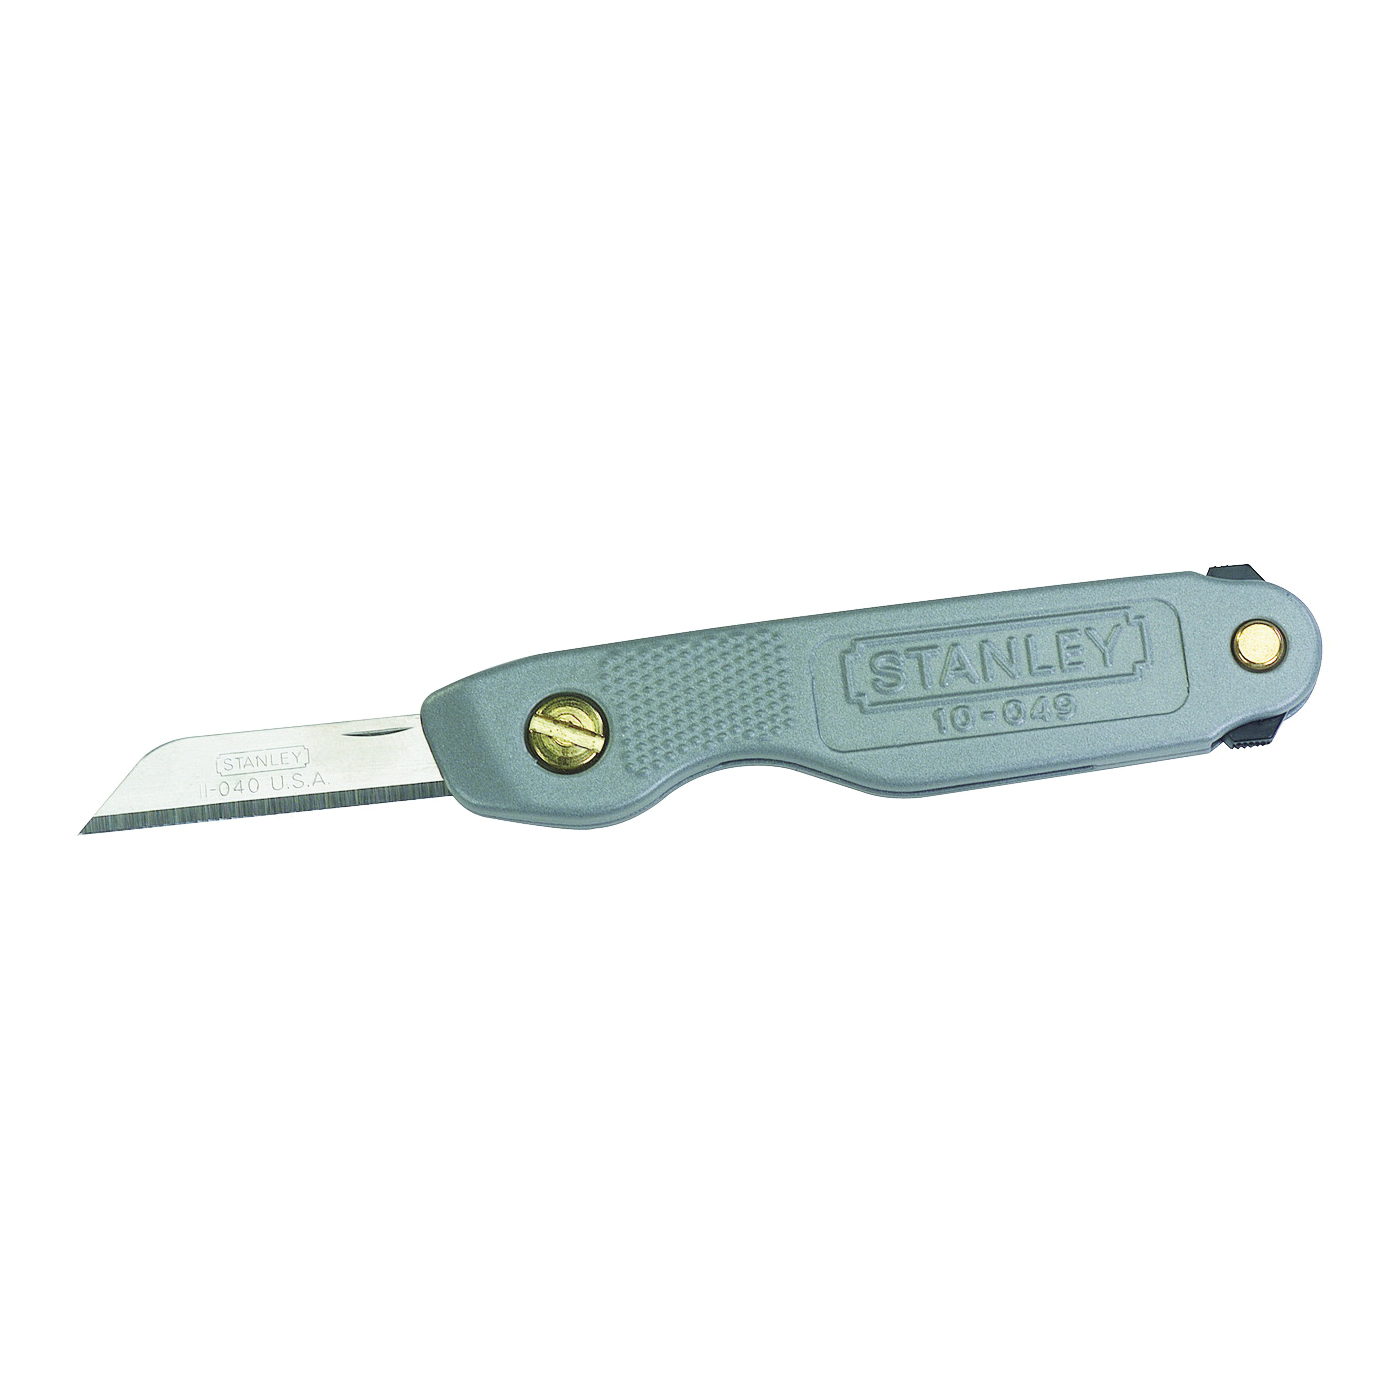 Stanley 10-049 Pocket Knife, Stainless Steel Blade, 1-Blade, Gray Handle